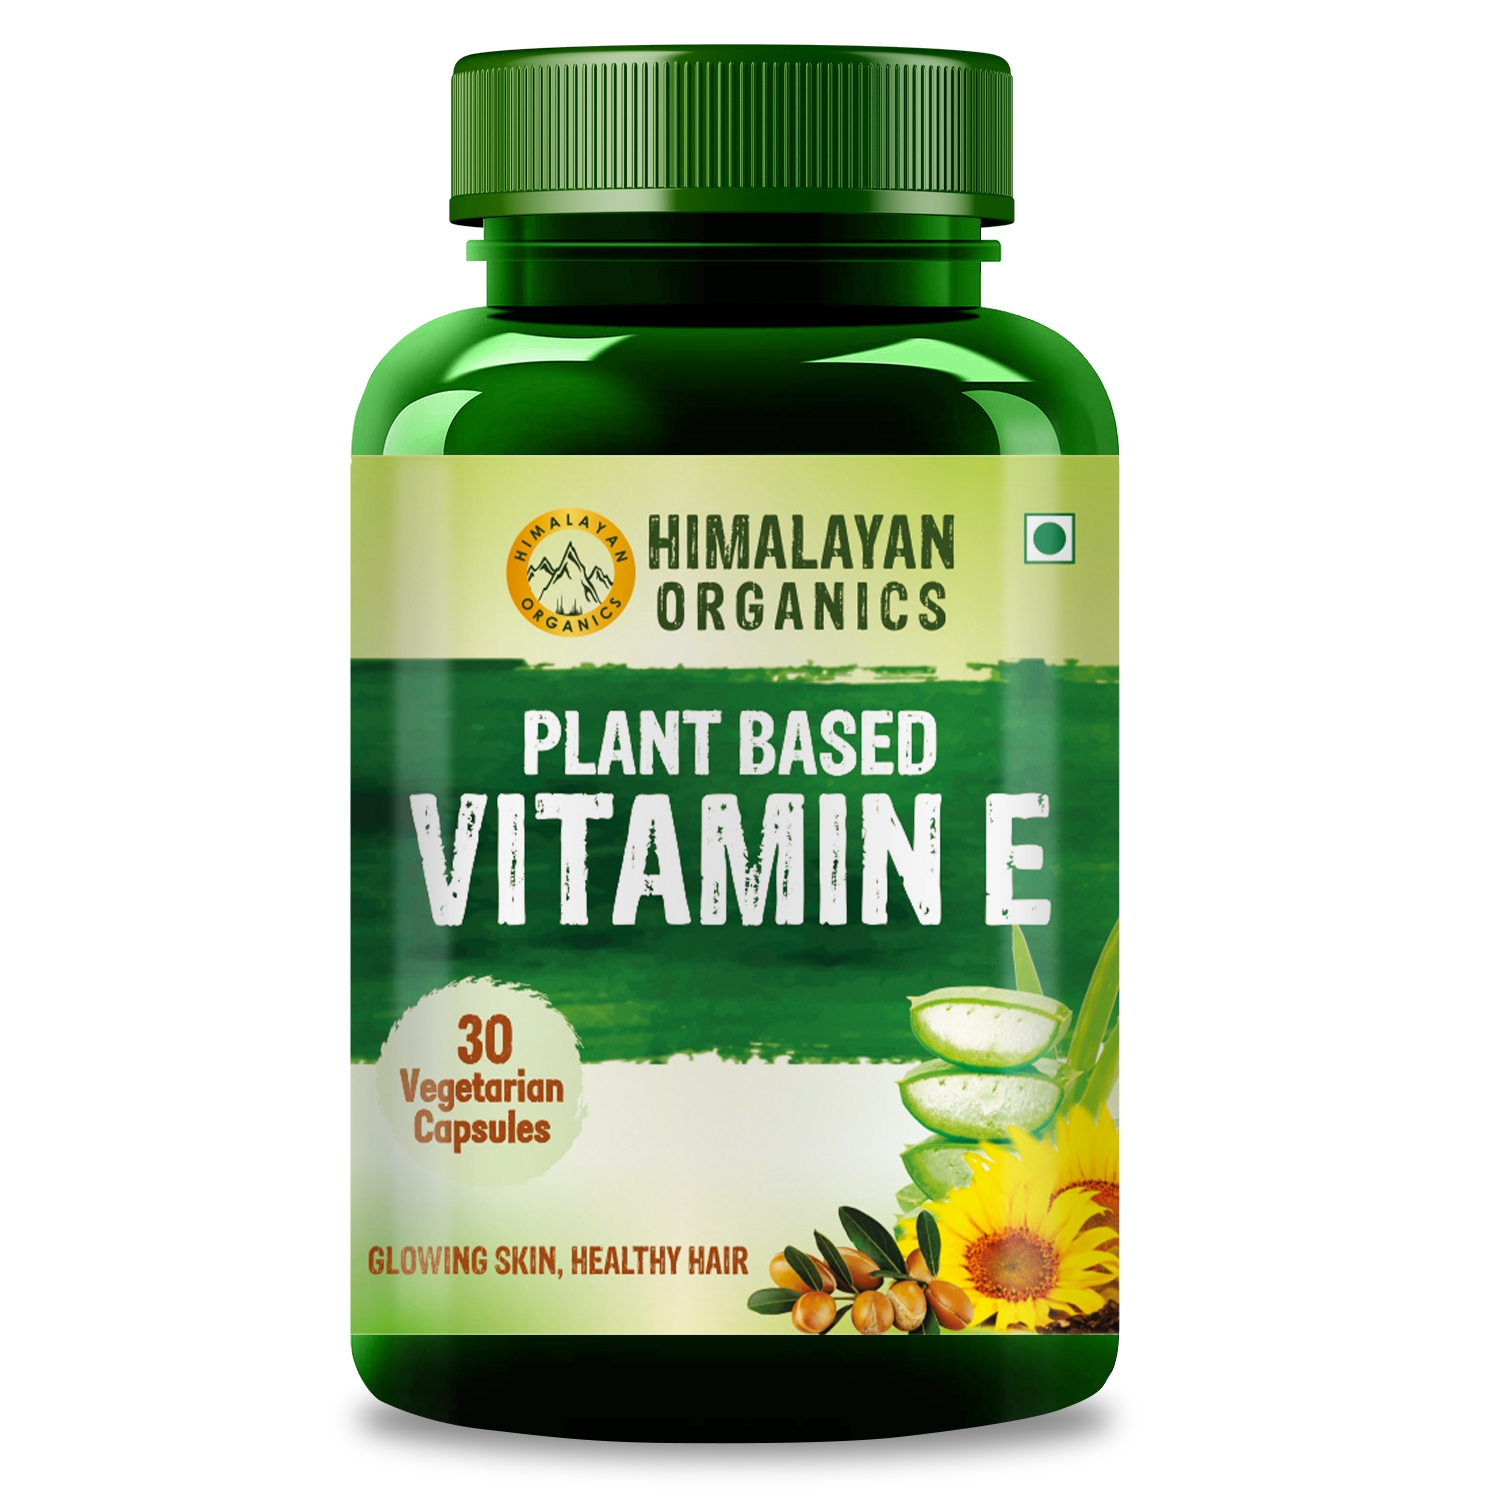 Himalayan Organics | Himalayan Organics Plant Based Vitamin E Capsules (Non-GMO Sunflower Oil, Aloevera Oil, Argan Oil) - 30 Capsules